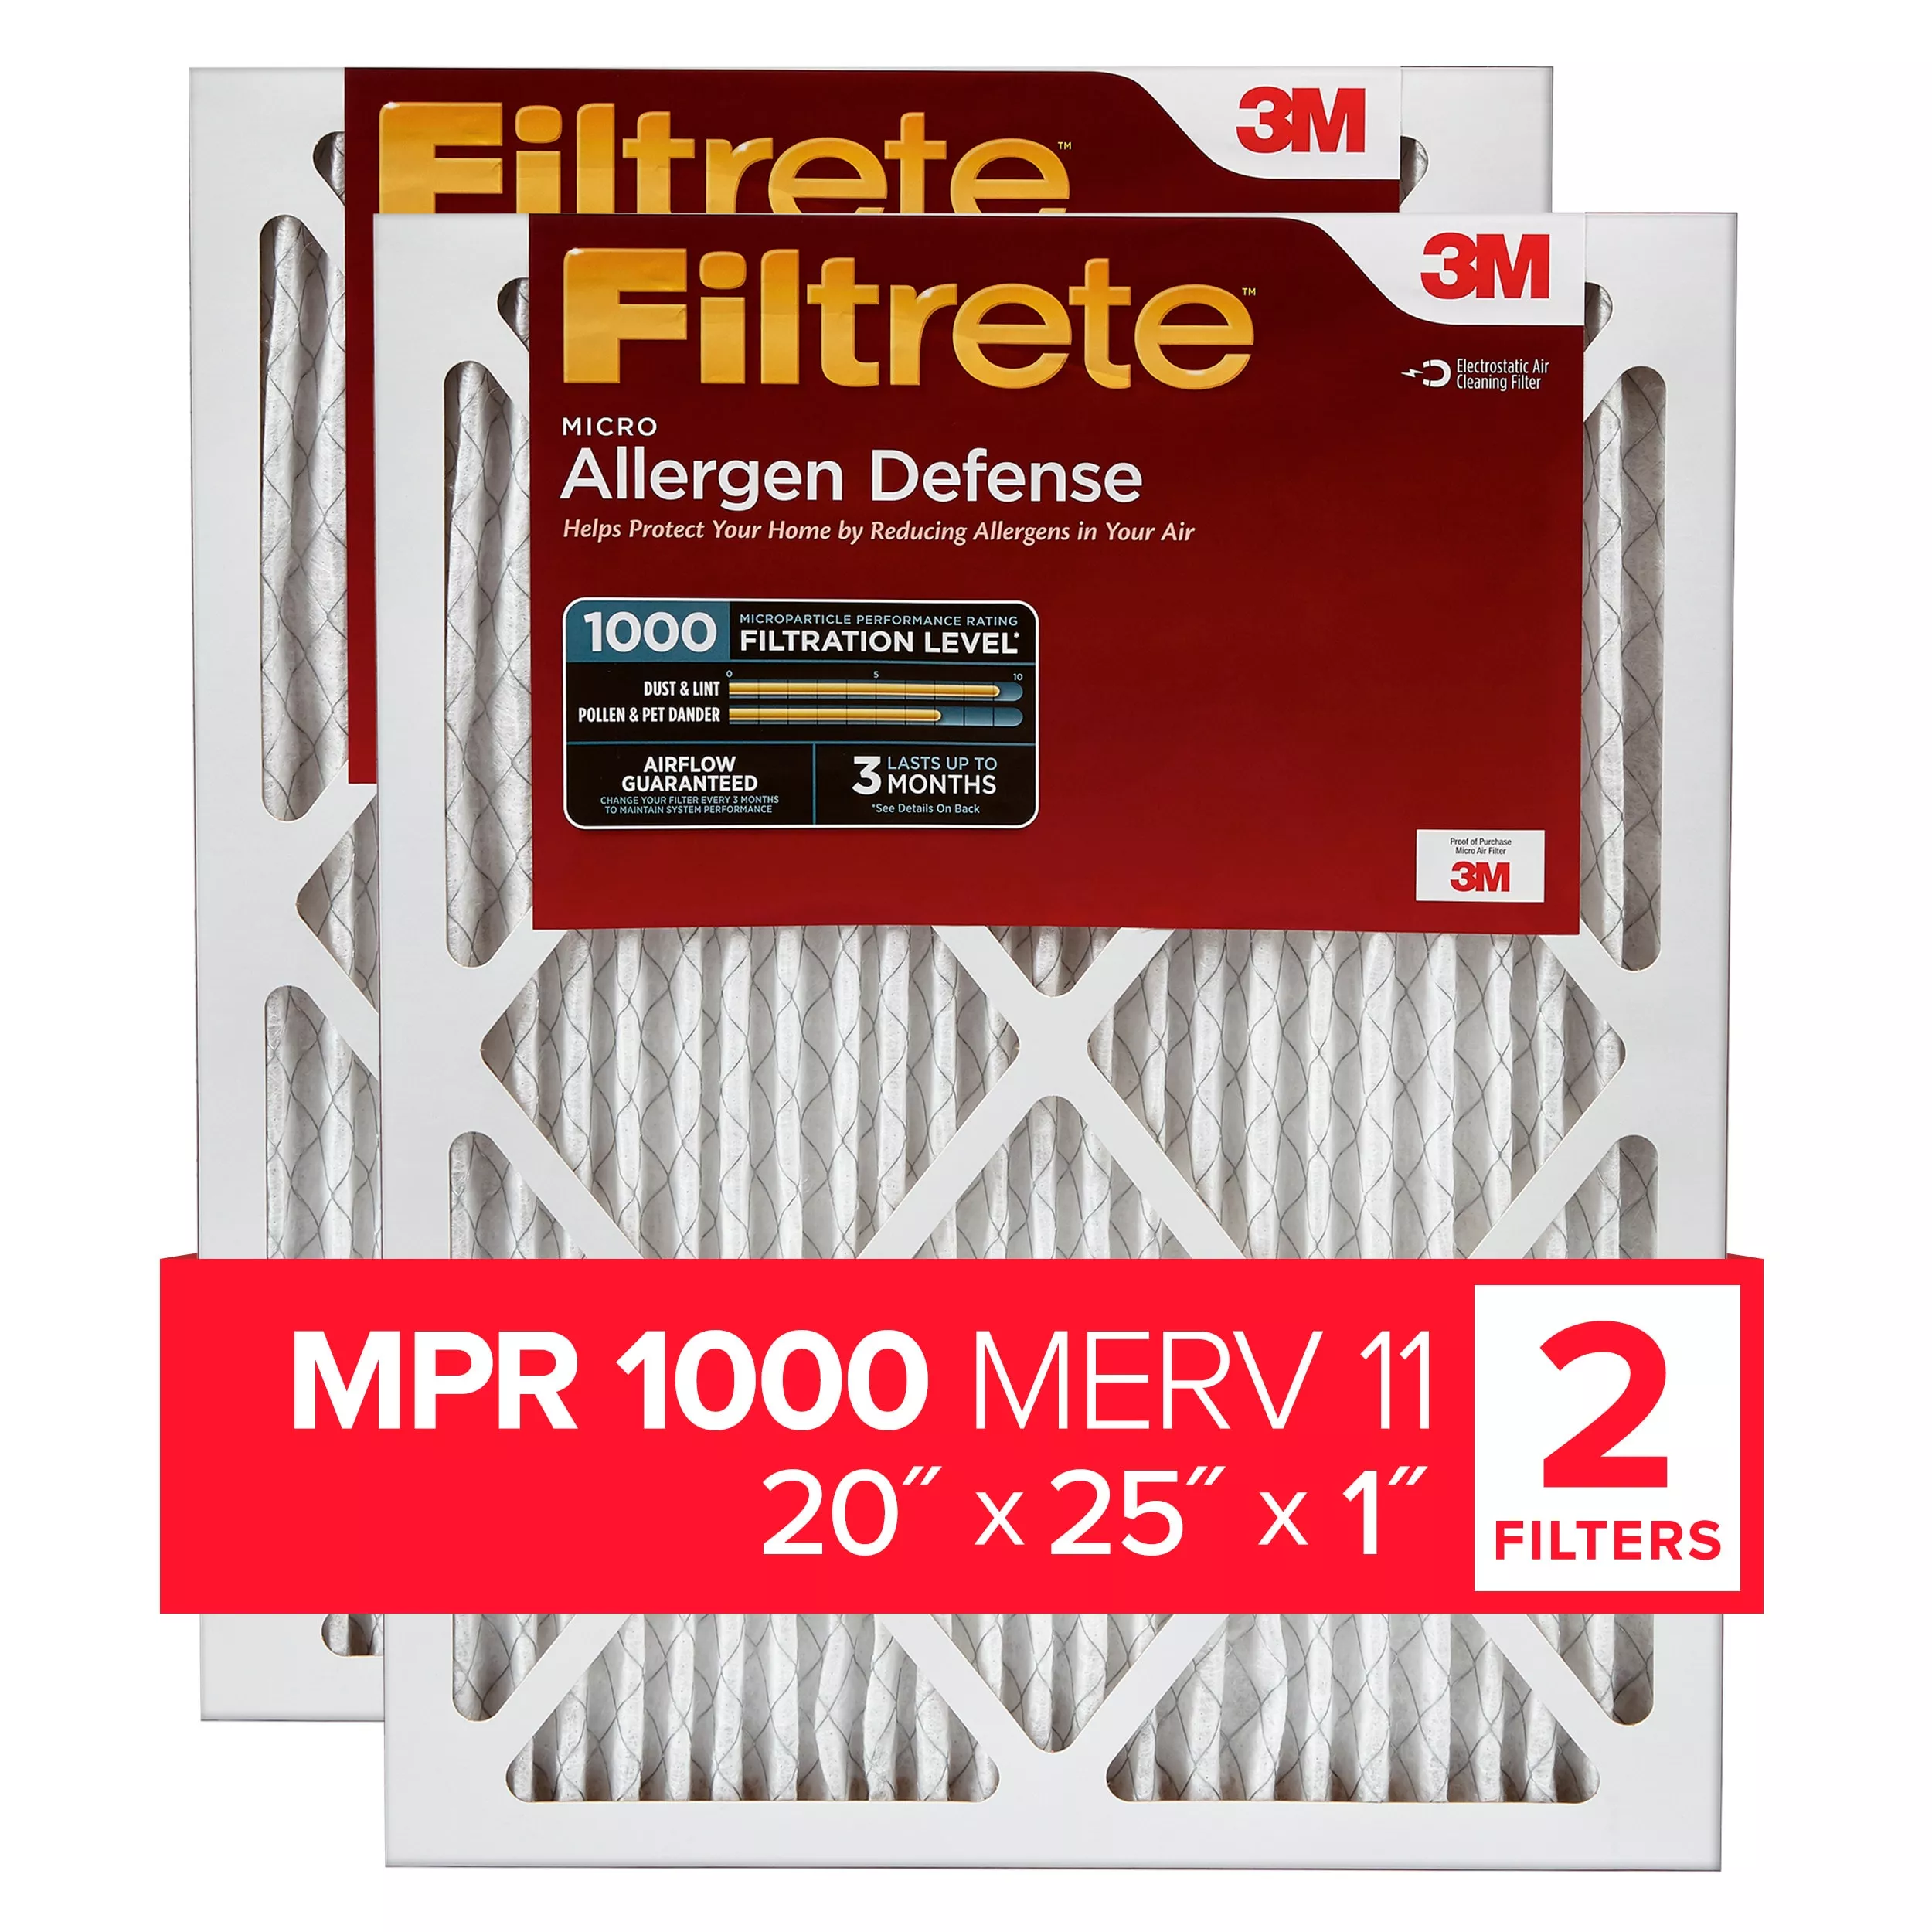 Filtrete™ Allergen Defense Filter AD03-2PK-6E-NA, MPR 1000, 20 in x 25
in x 1 in (50.8 cm x 63.5 cm x 2.5 cm), 2/pk